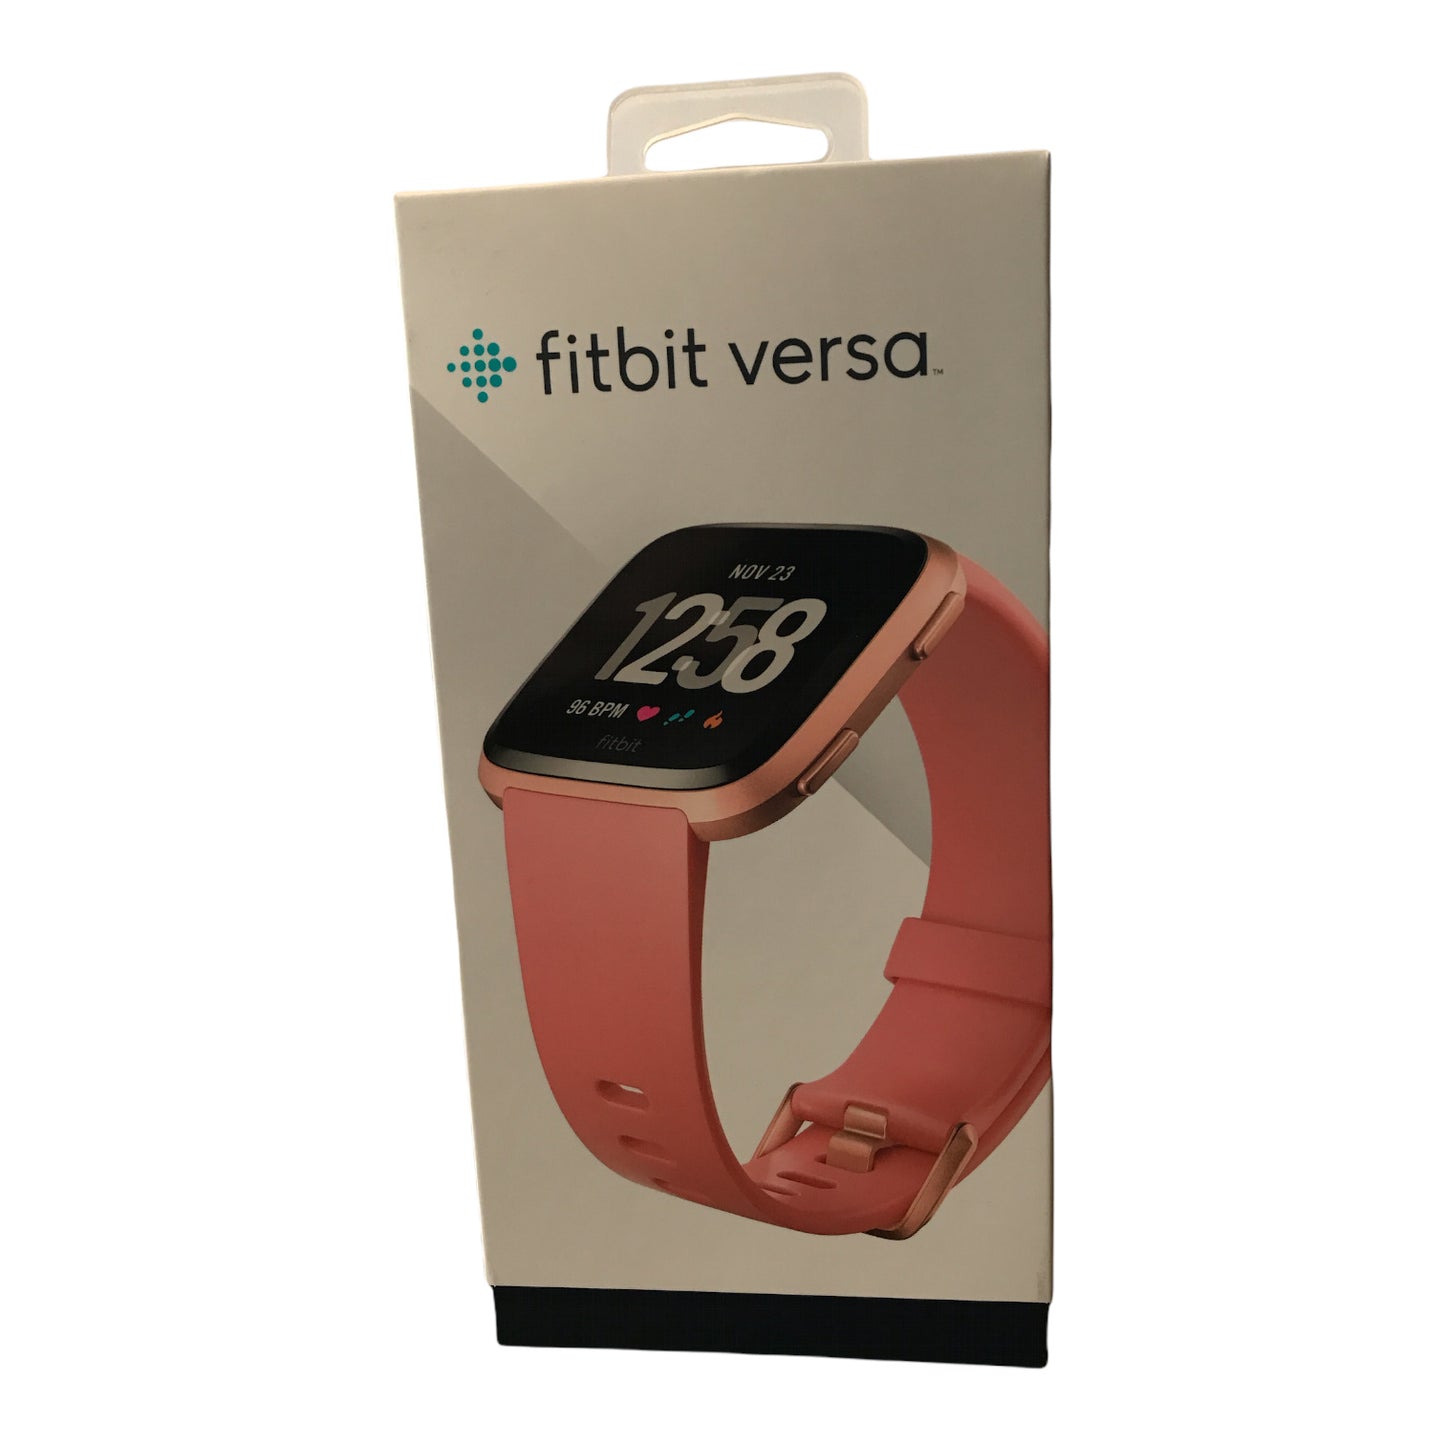 Fitbit Versa Smart Watch, Peach/Rose Gold Aluminum, (S/L Bands Included)